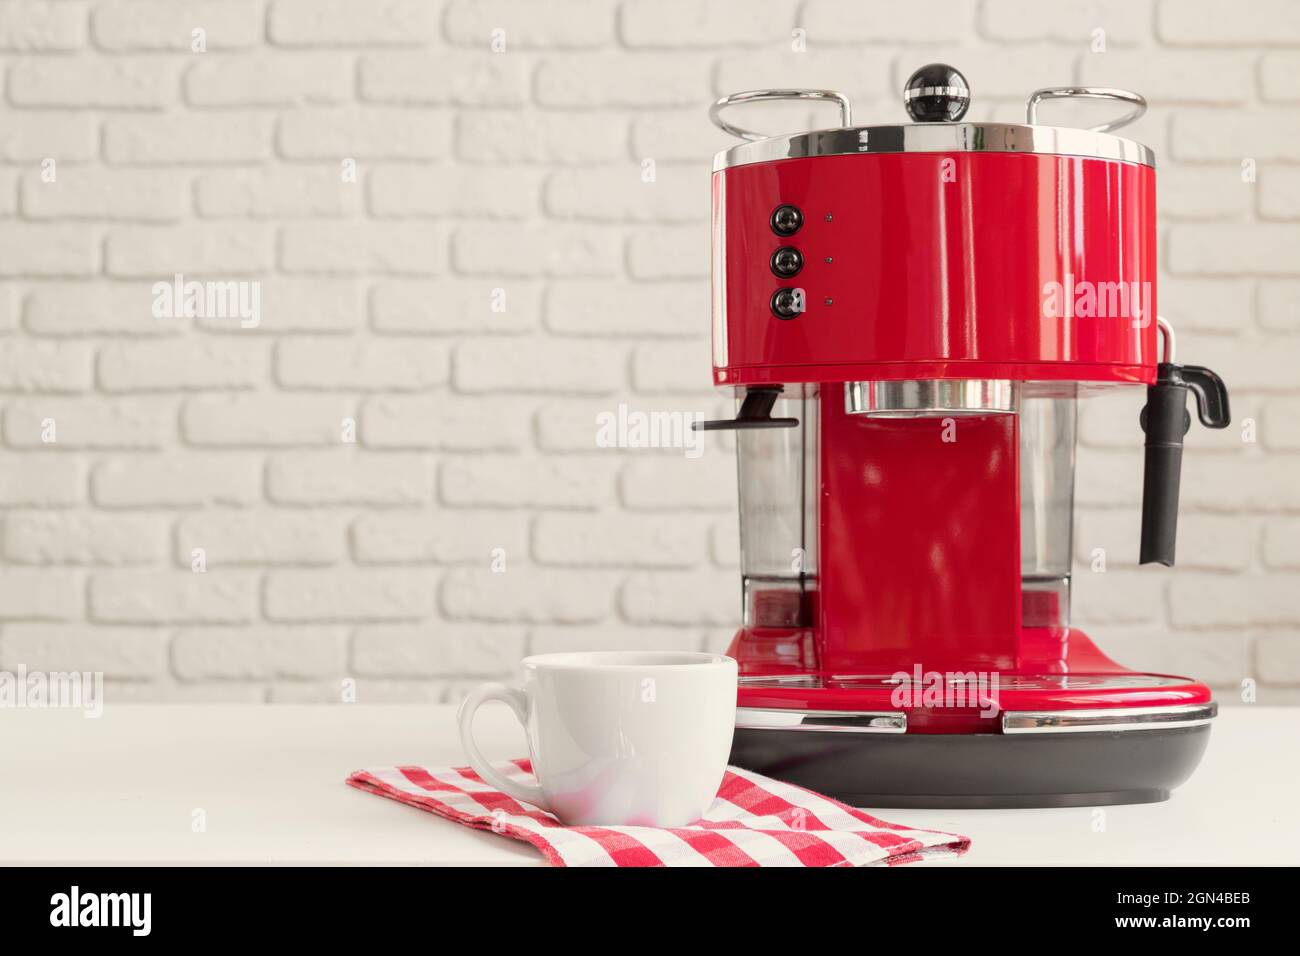 https://c8.alamy.com/comp/2GN4BEB/modern-kitchen-red-retro-style-coffee-machine-close-up-2GN4BEB.jpg